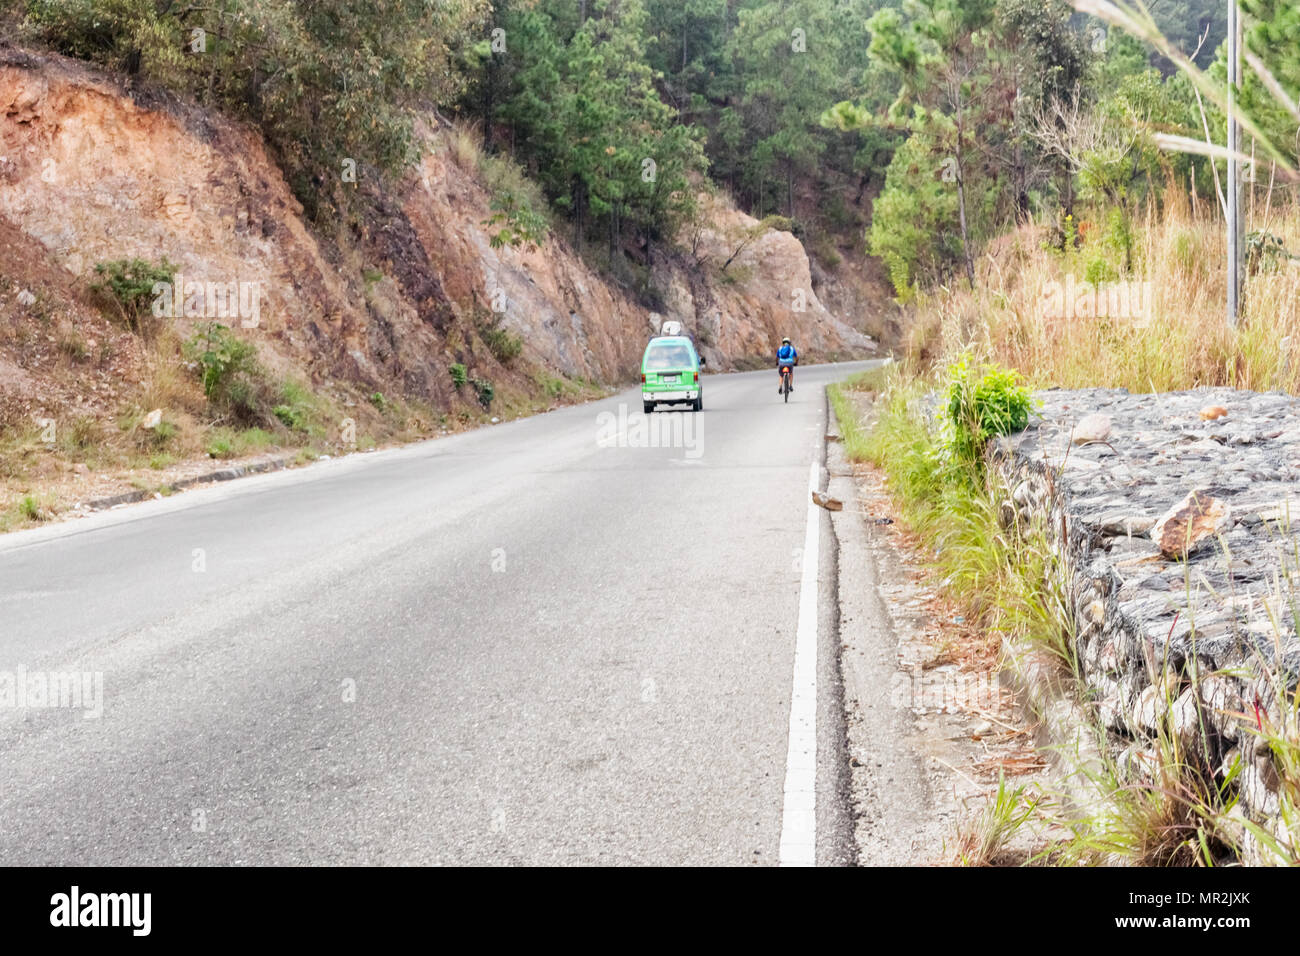 San Jose Arada, Guatemala - December 3, 2016: Car is passing man riding on bicycle on the countryside of Guatemala near San Jose Arada. Stock Photo